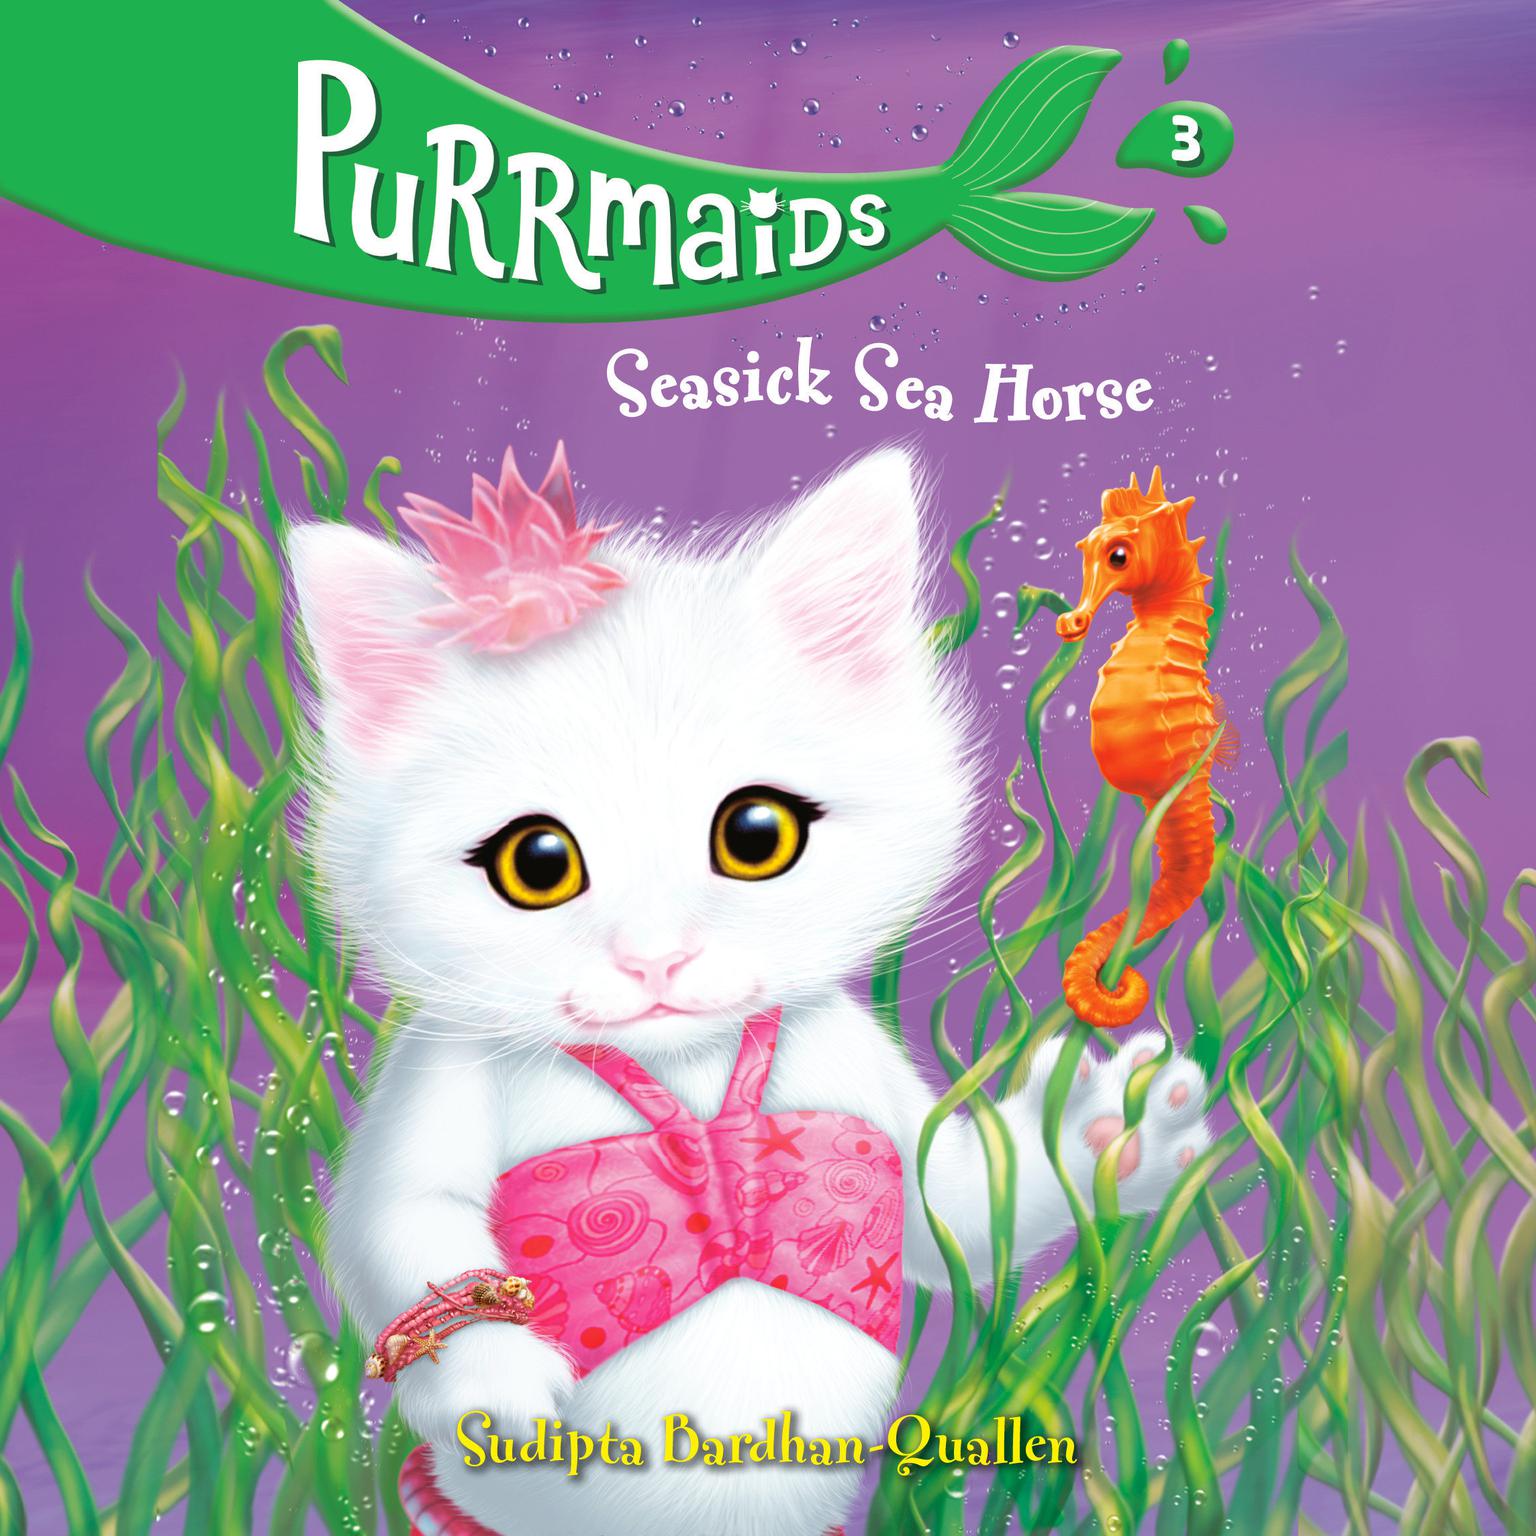 Purrmaids #3: Seasick Sea Horse Audiobook, by Sudipta Bardhan-Quallen